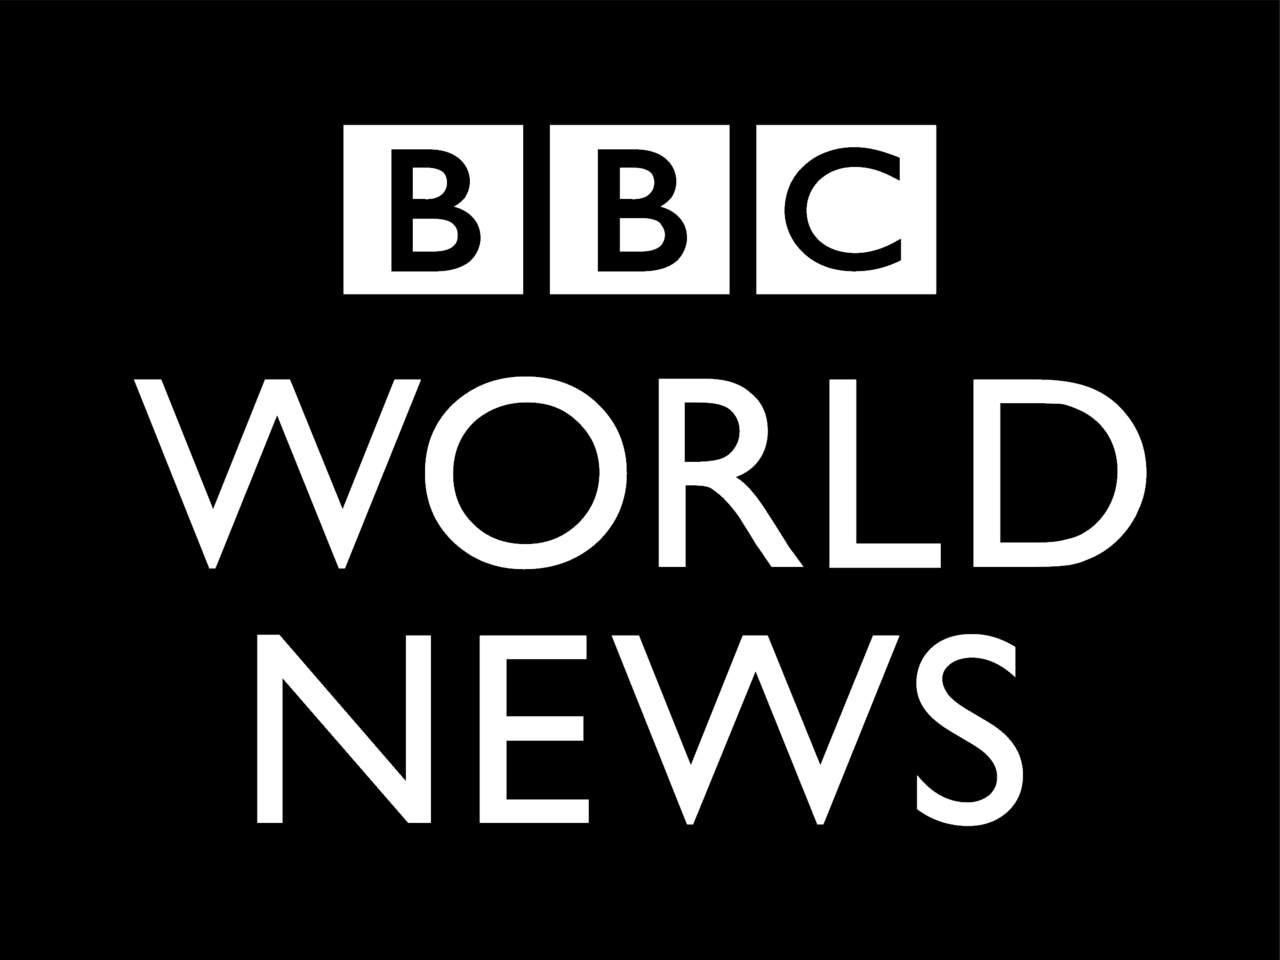 bbc-world-news-logo-bvgee1.png